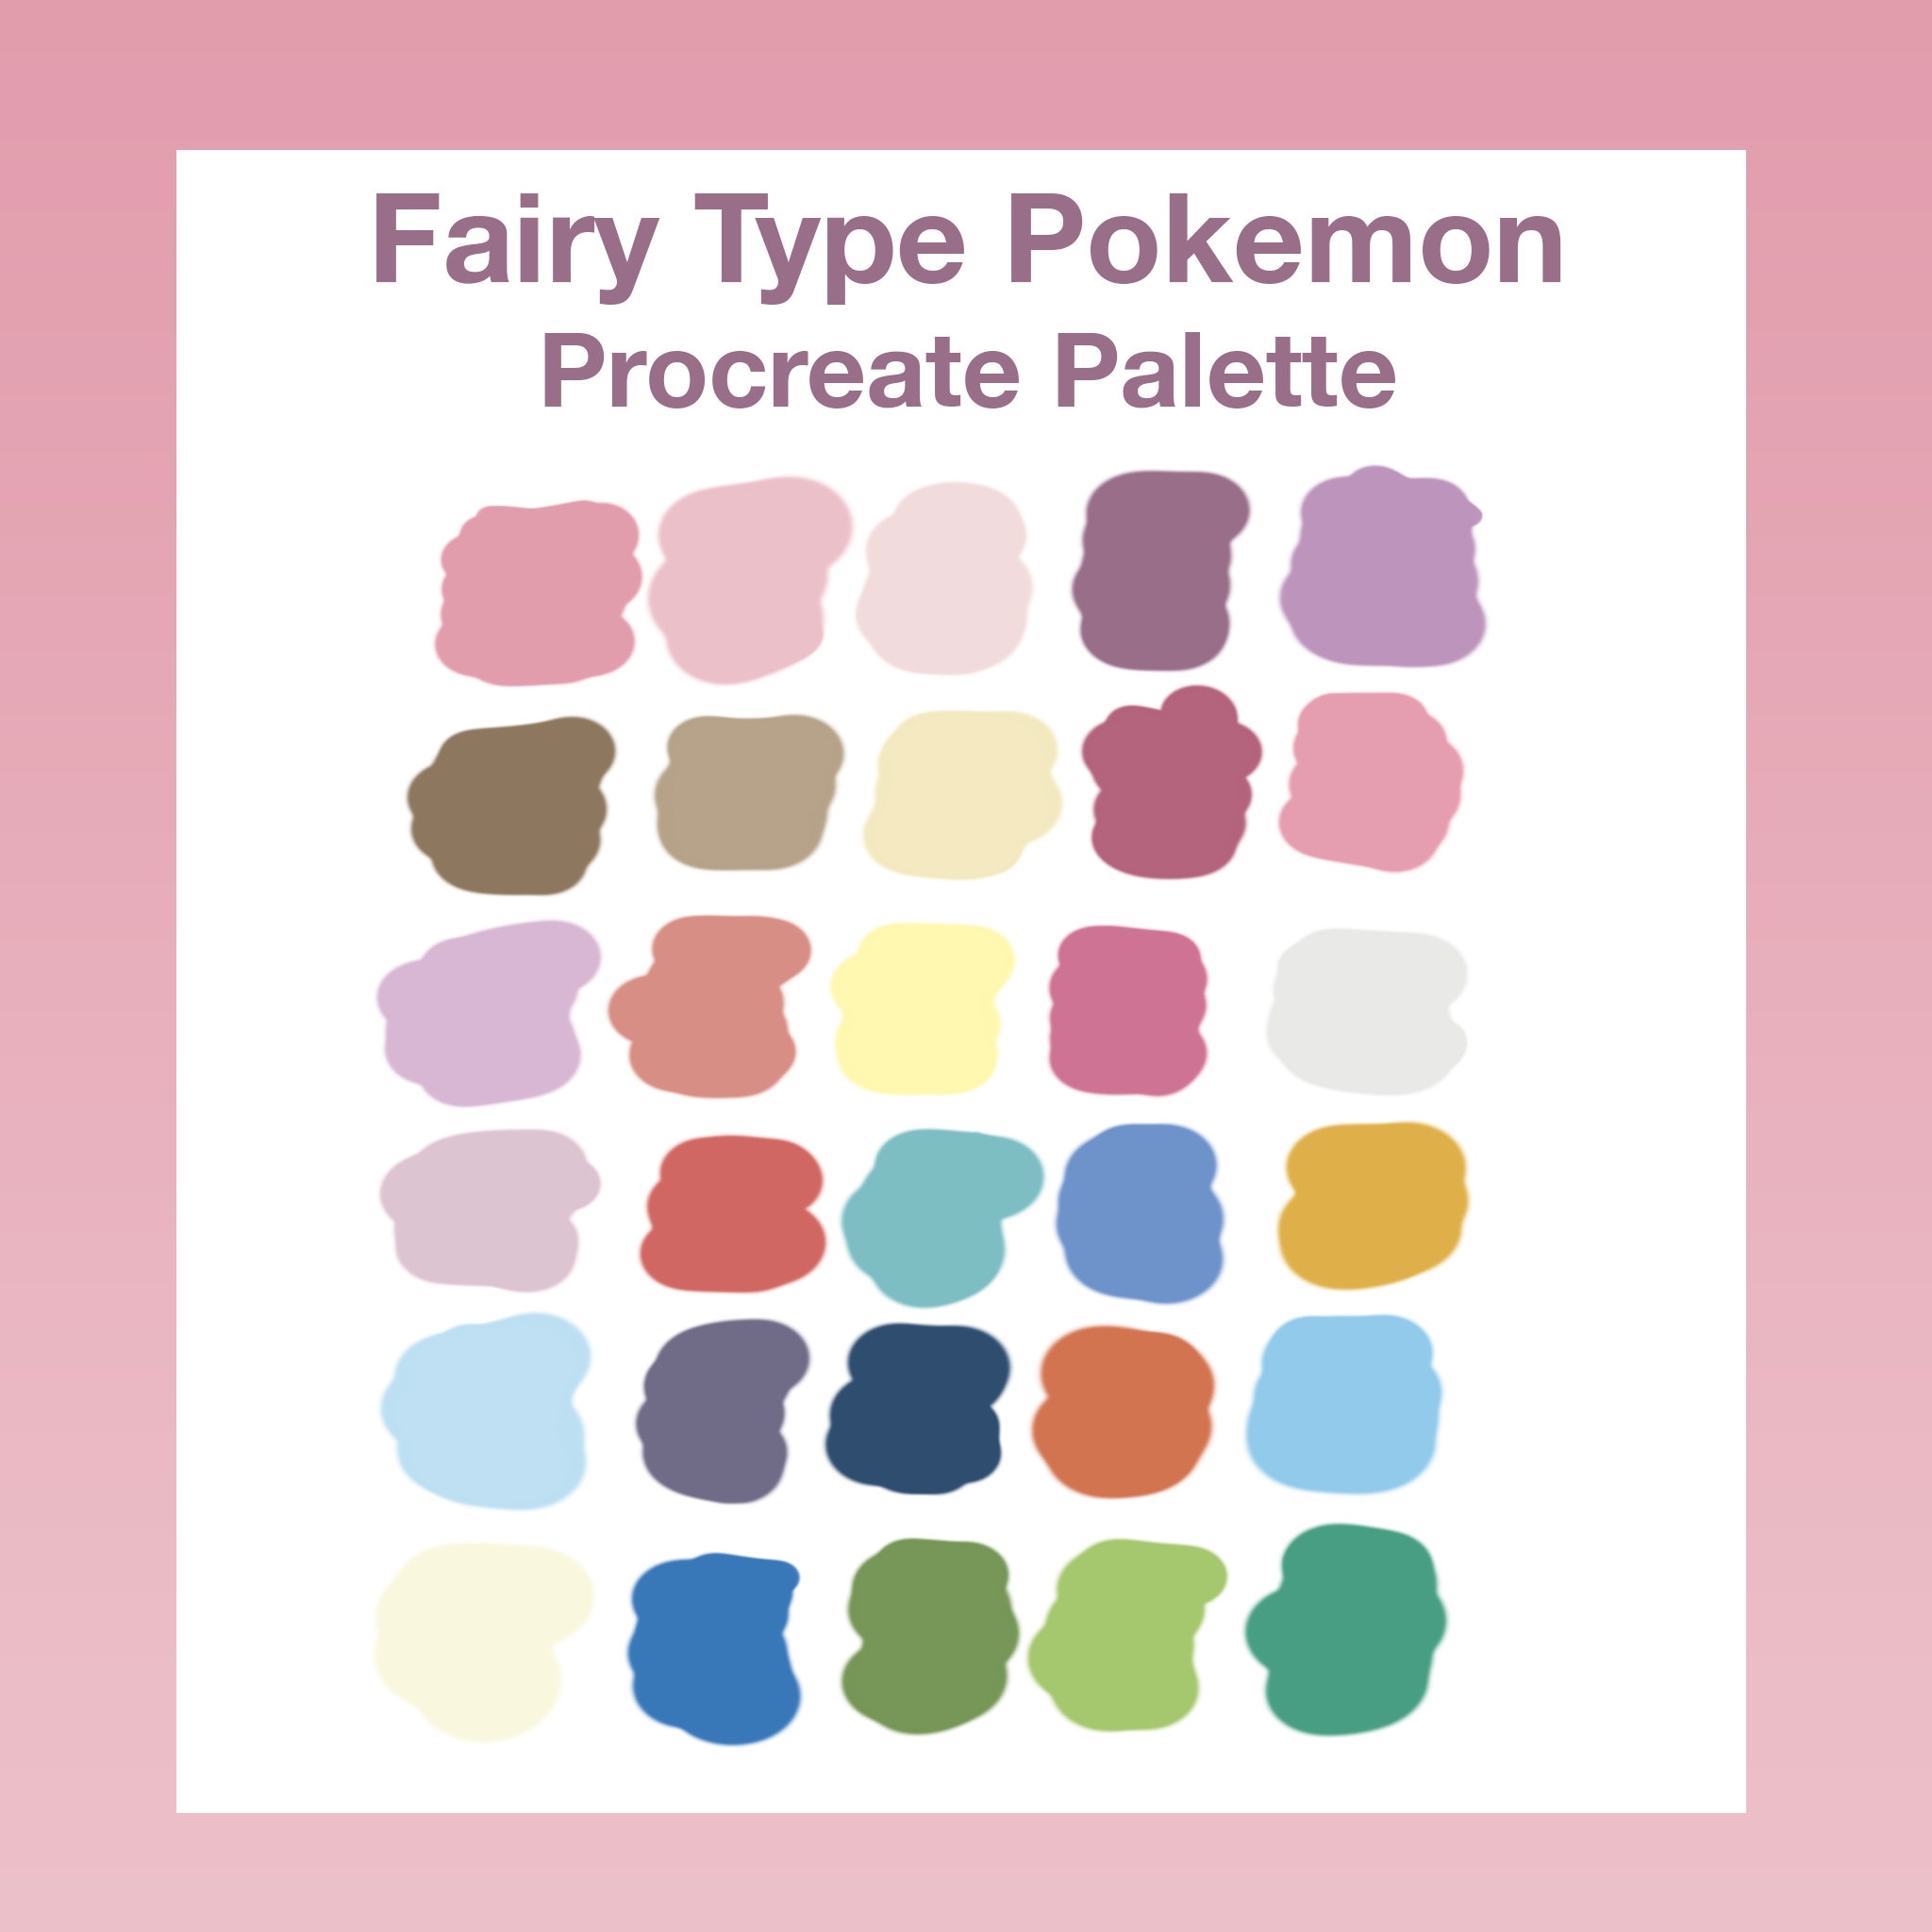 Fairy type pokemon procreate palette pokemon inspired swatches instant download